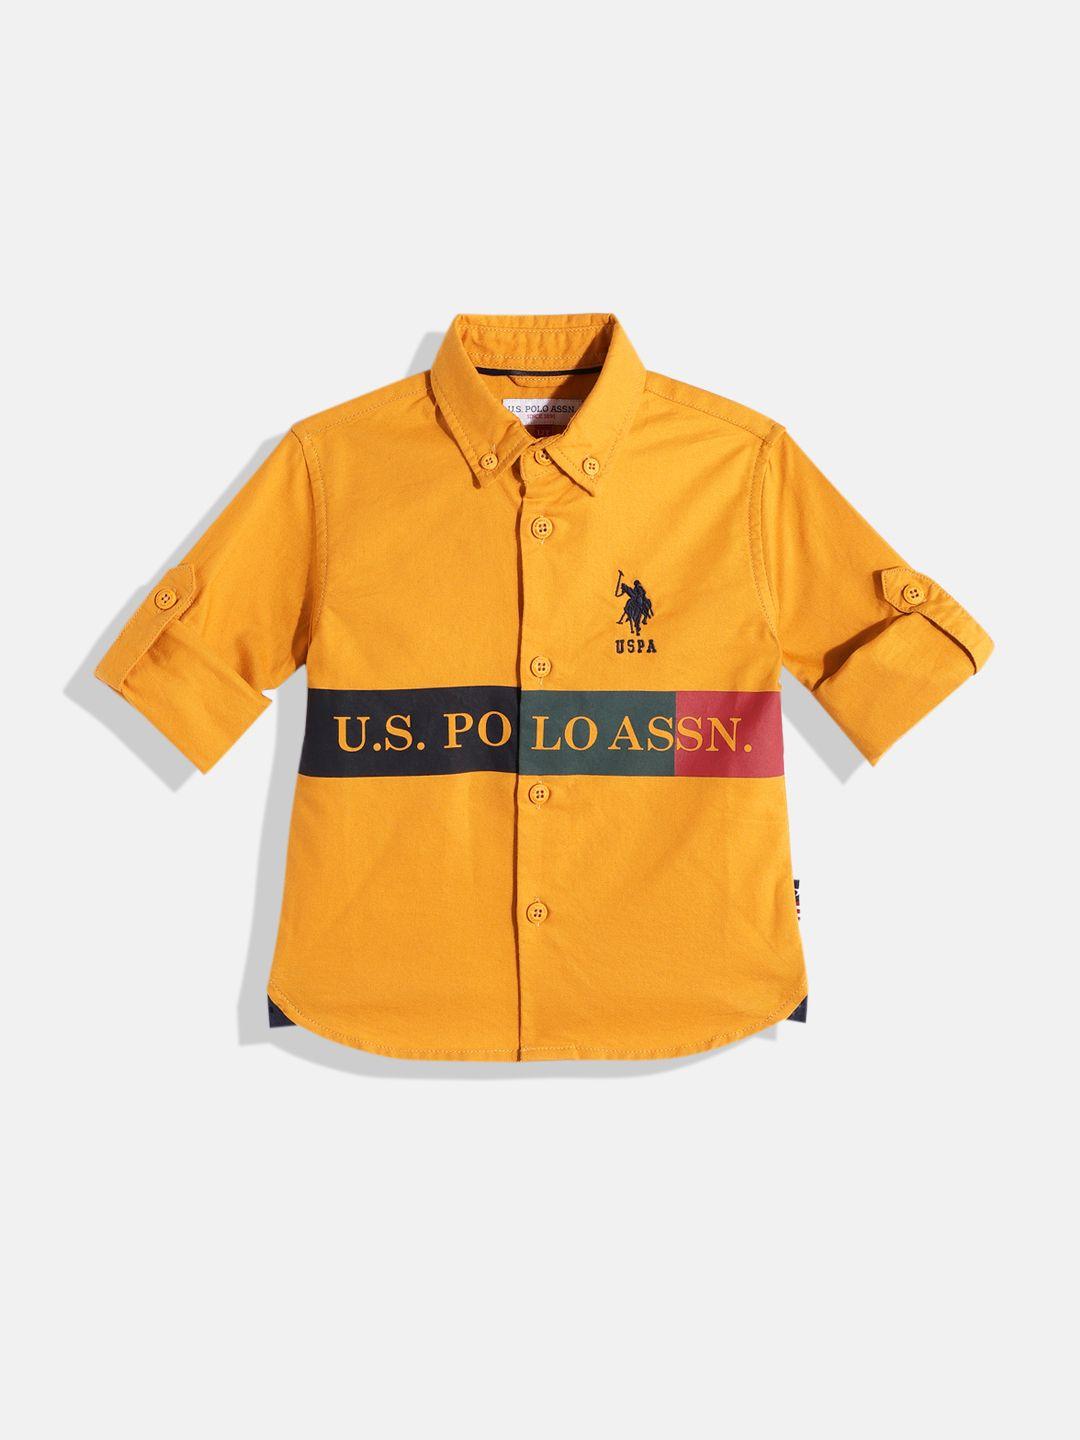 u.s. polo assn. kids boys printed pure cotton casual shirt